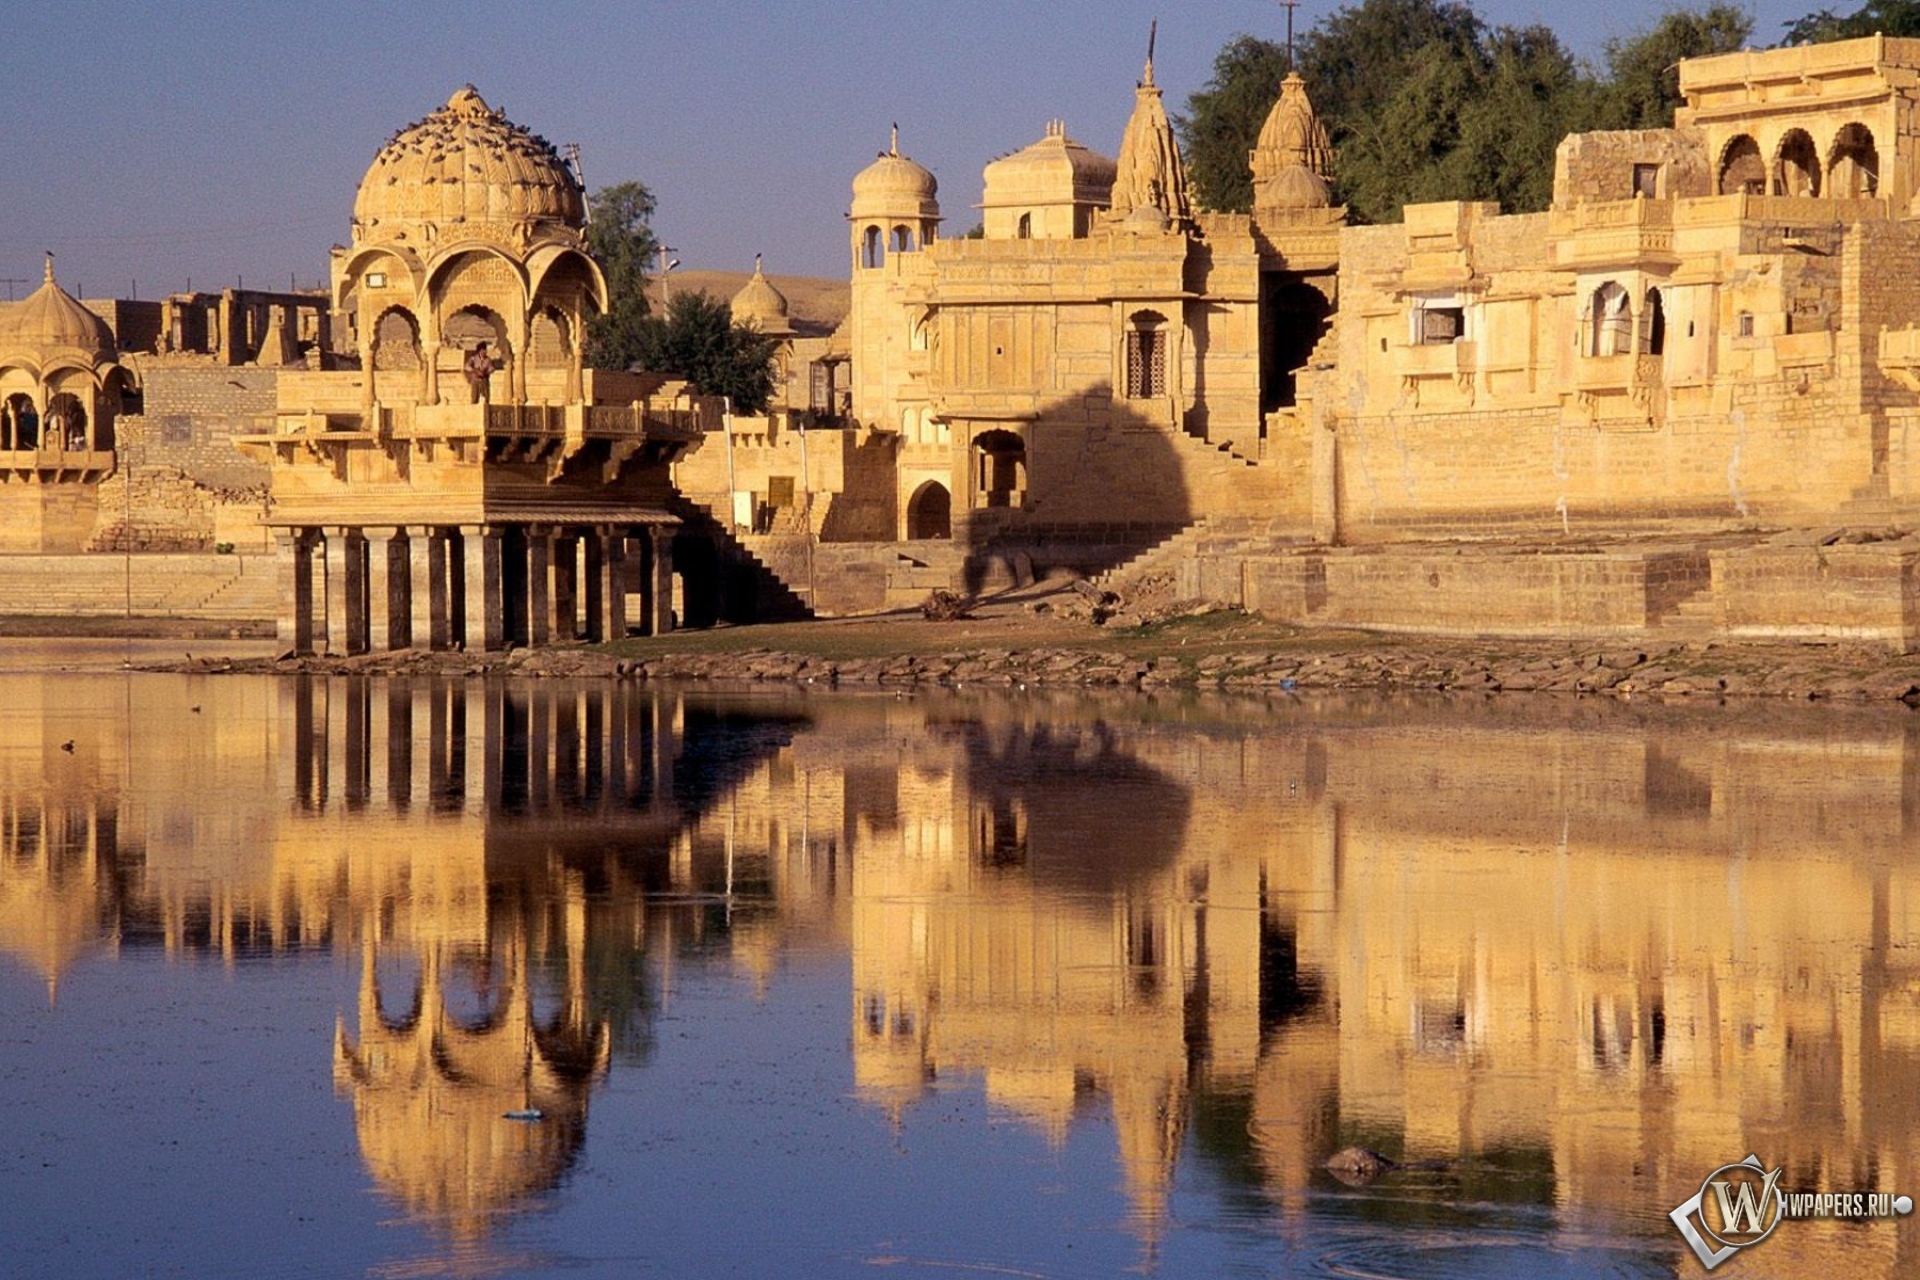 Jaisalmer - Rajasthan - India  1920x1280